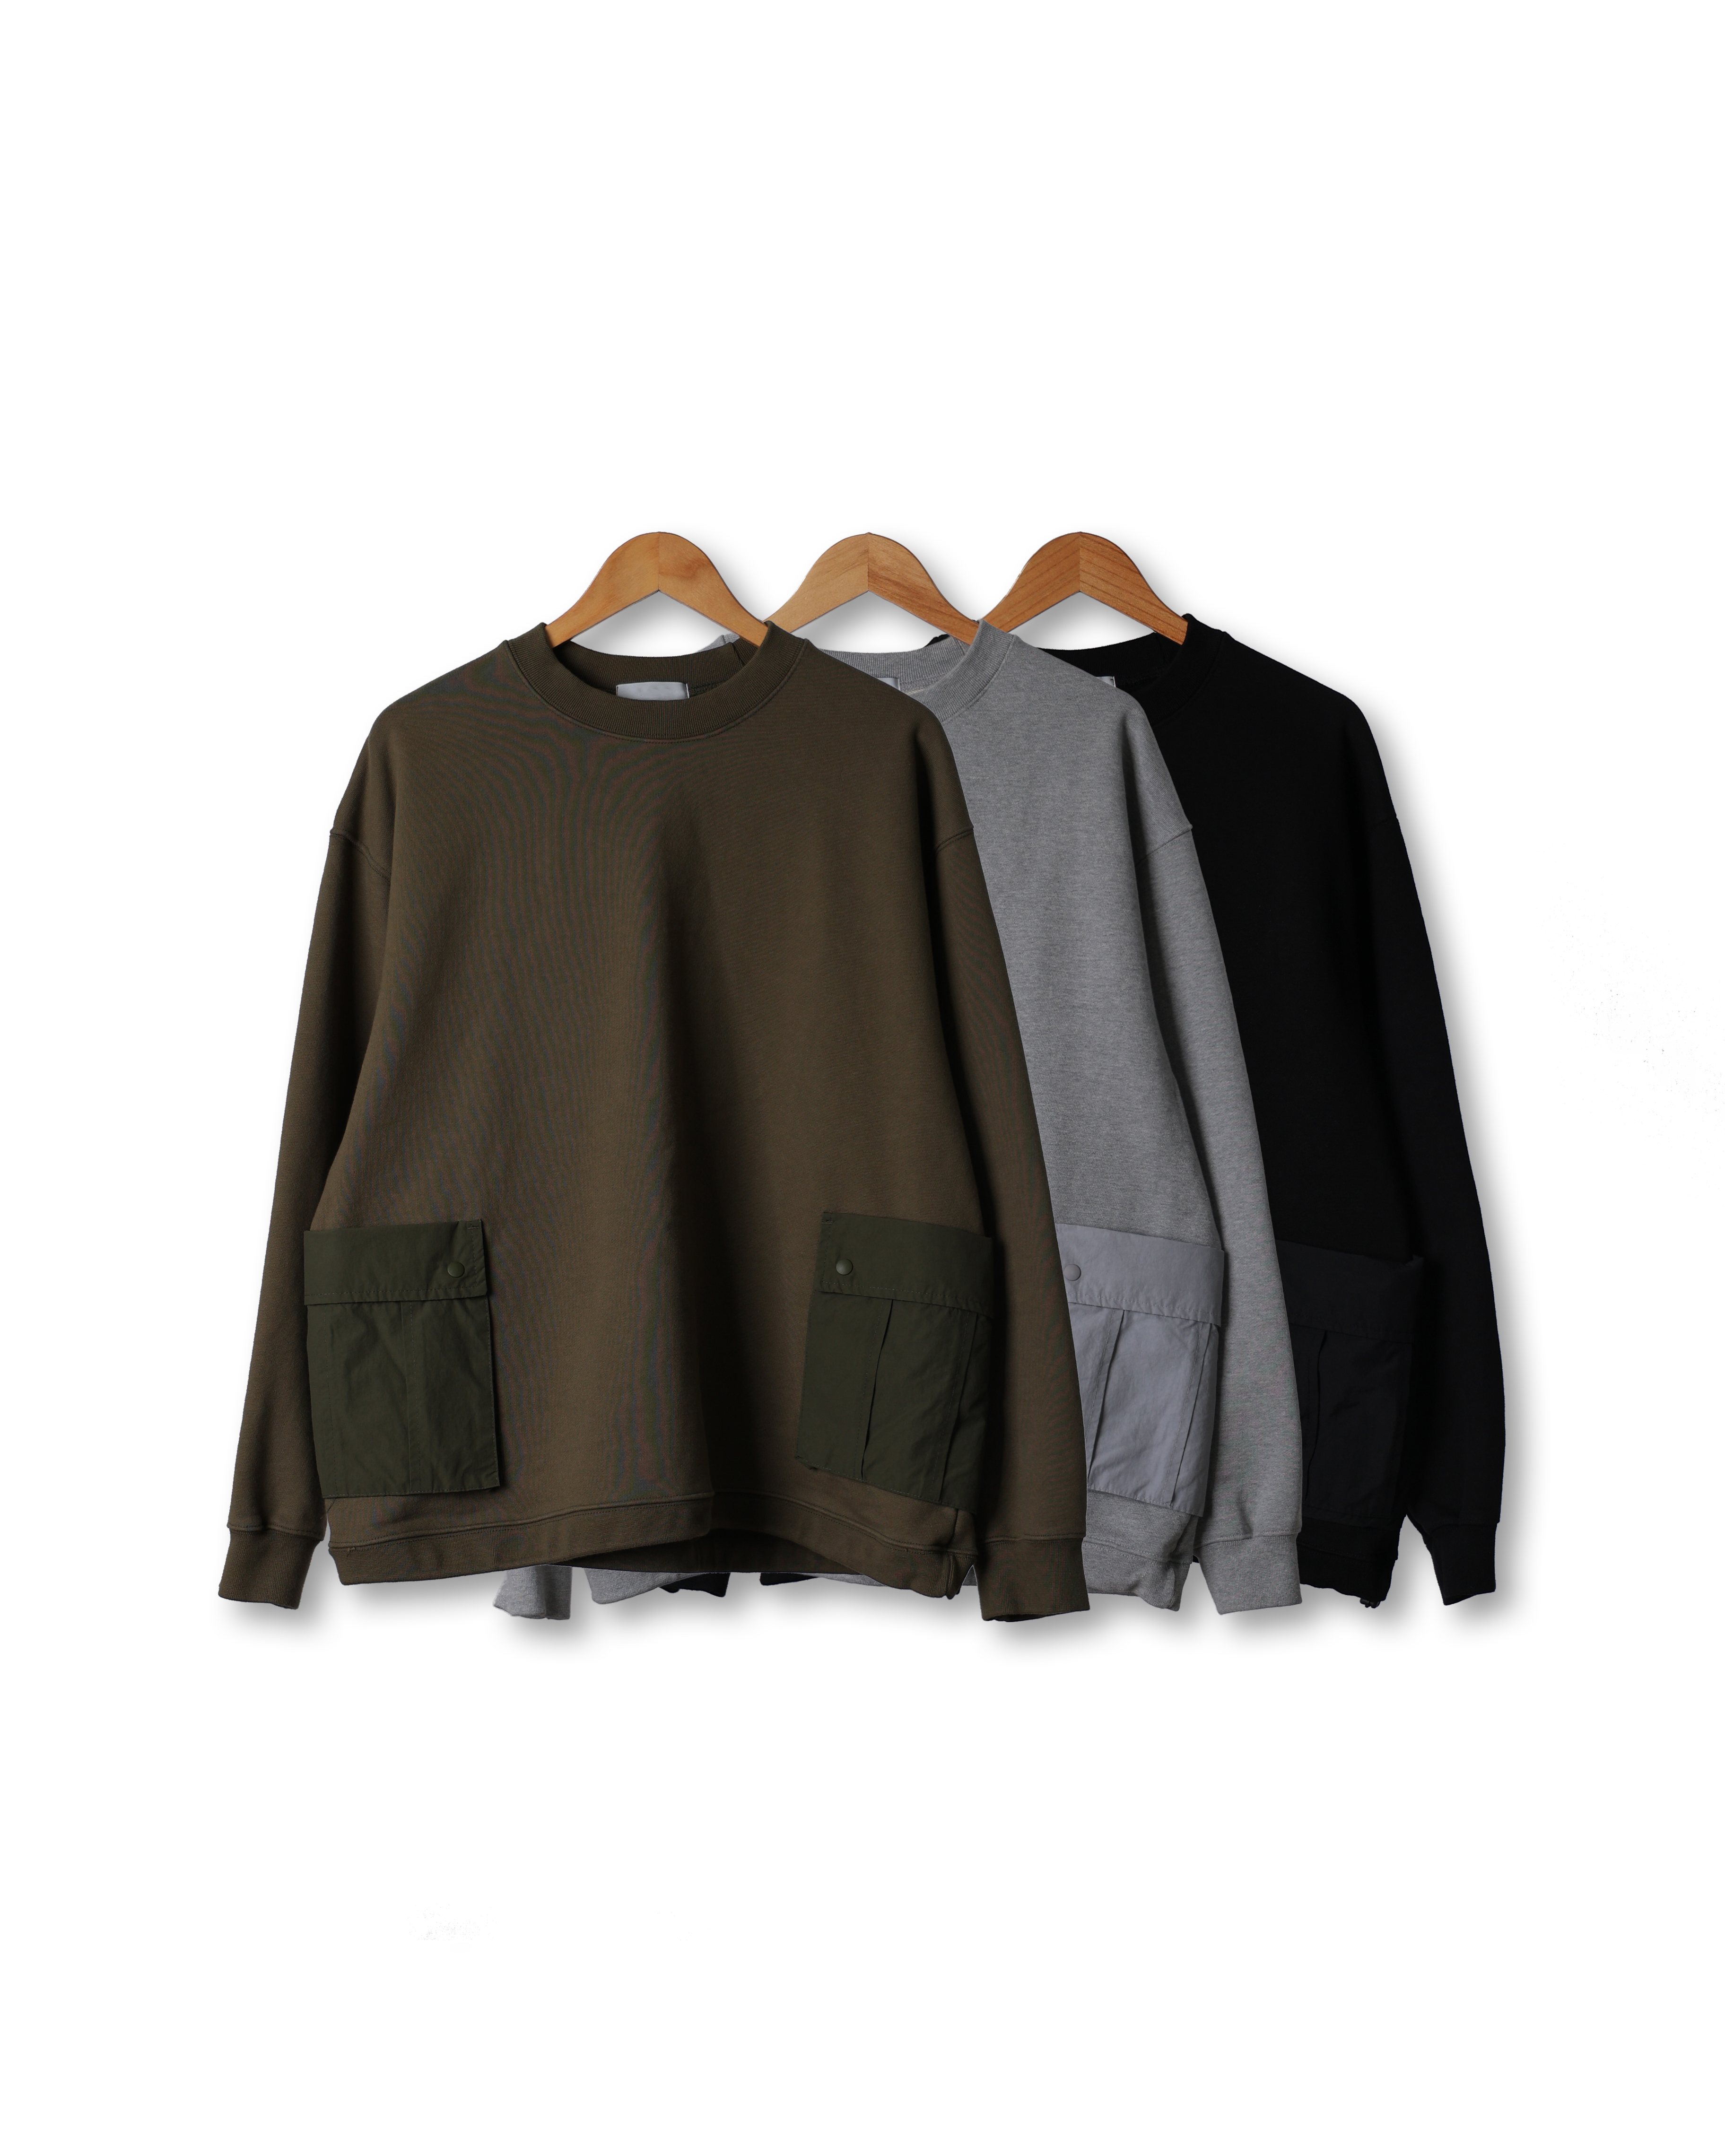 SPECT Double Pocket Hard Sweat Shirts (Black/Gray/Olive)